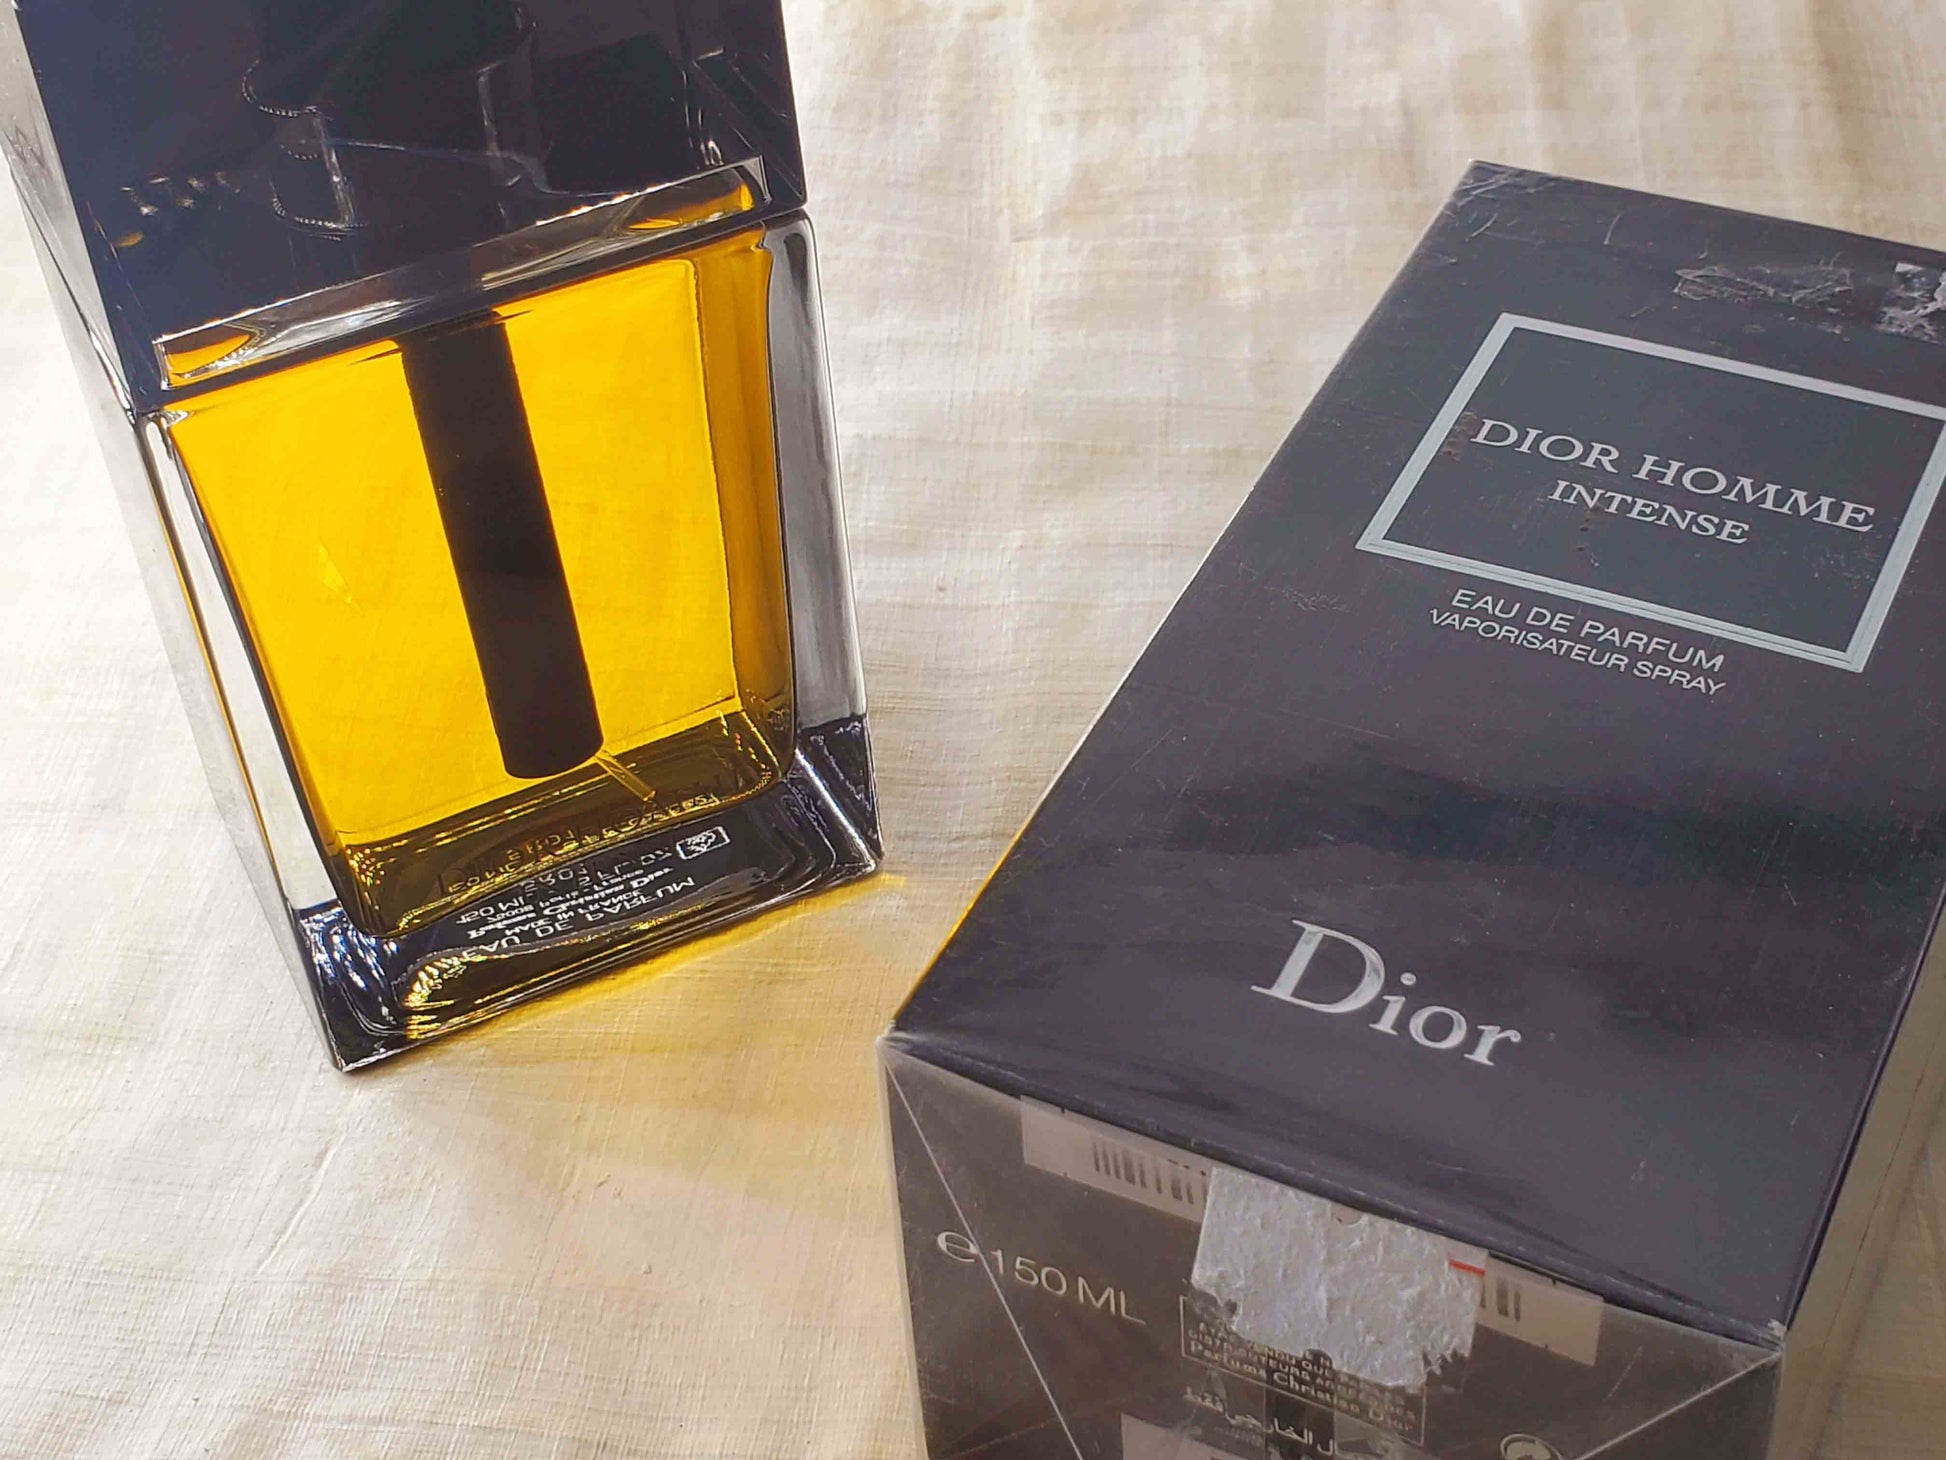 Dior Homme Intense by Christian Dior for Men 5 oz Edp Spray